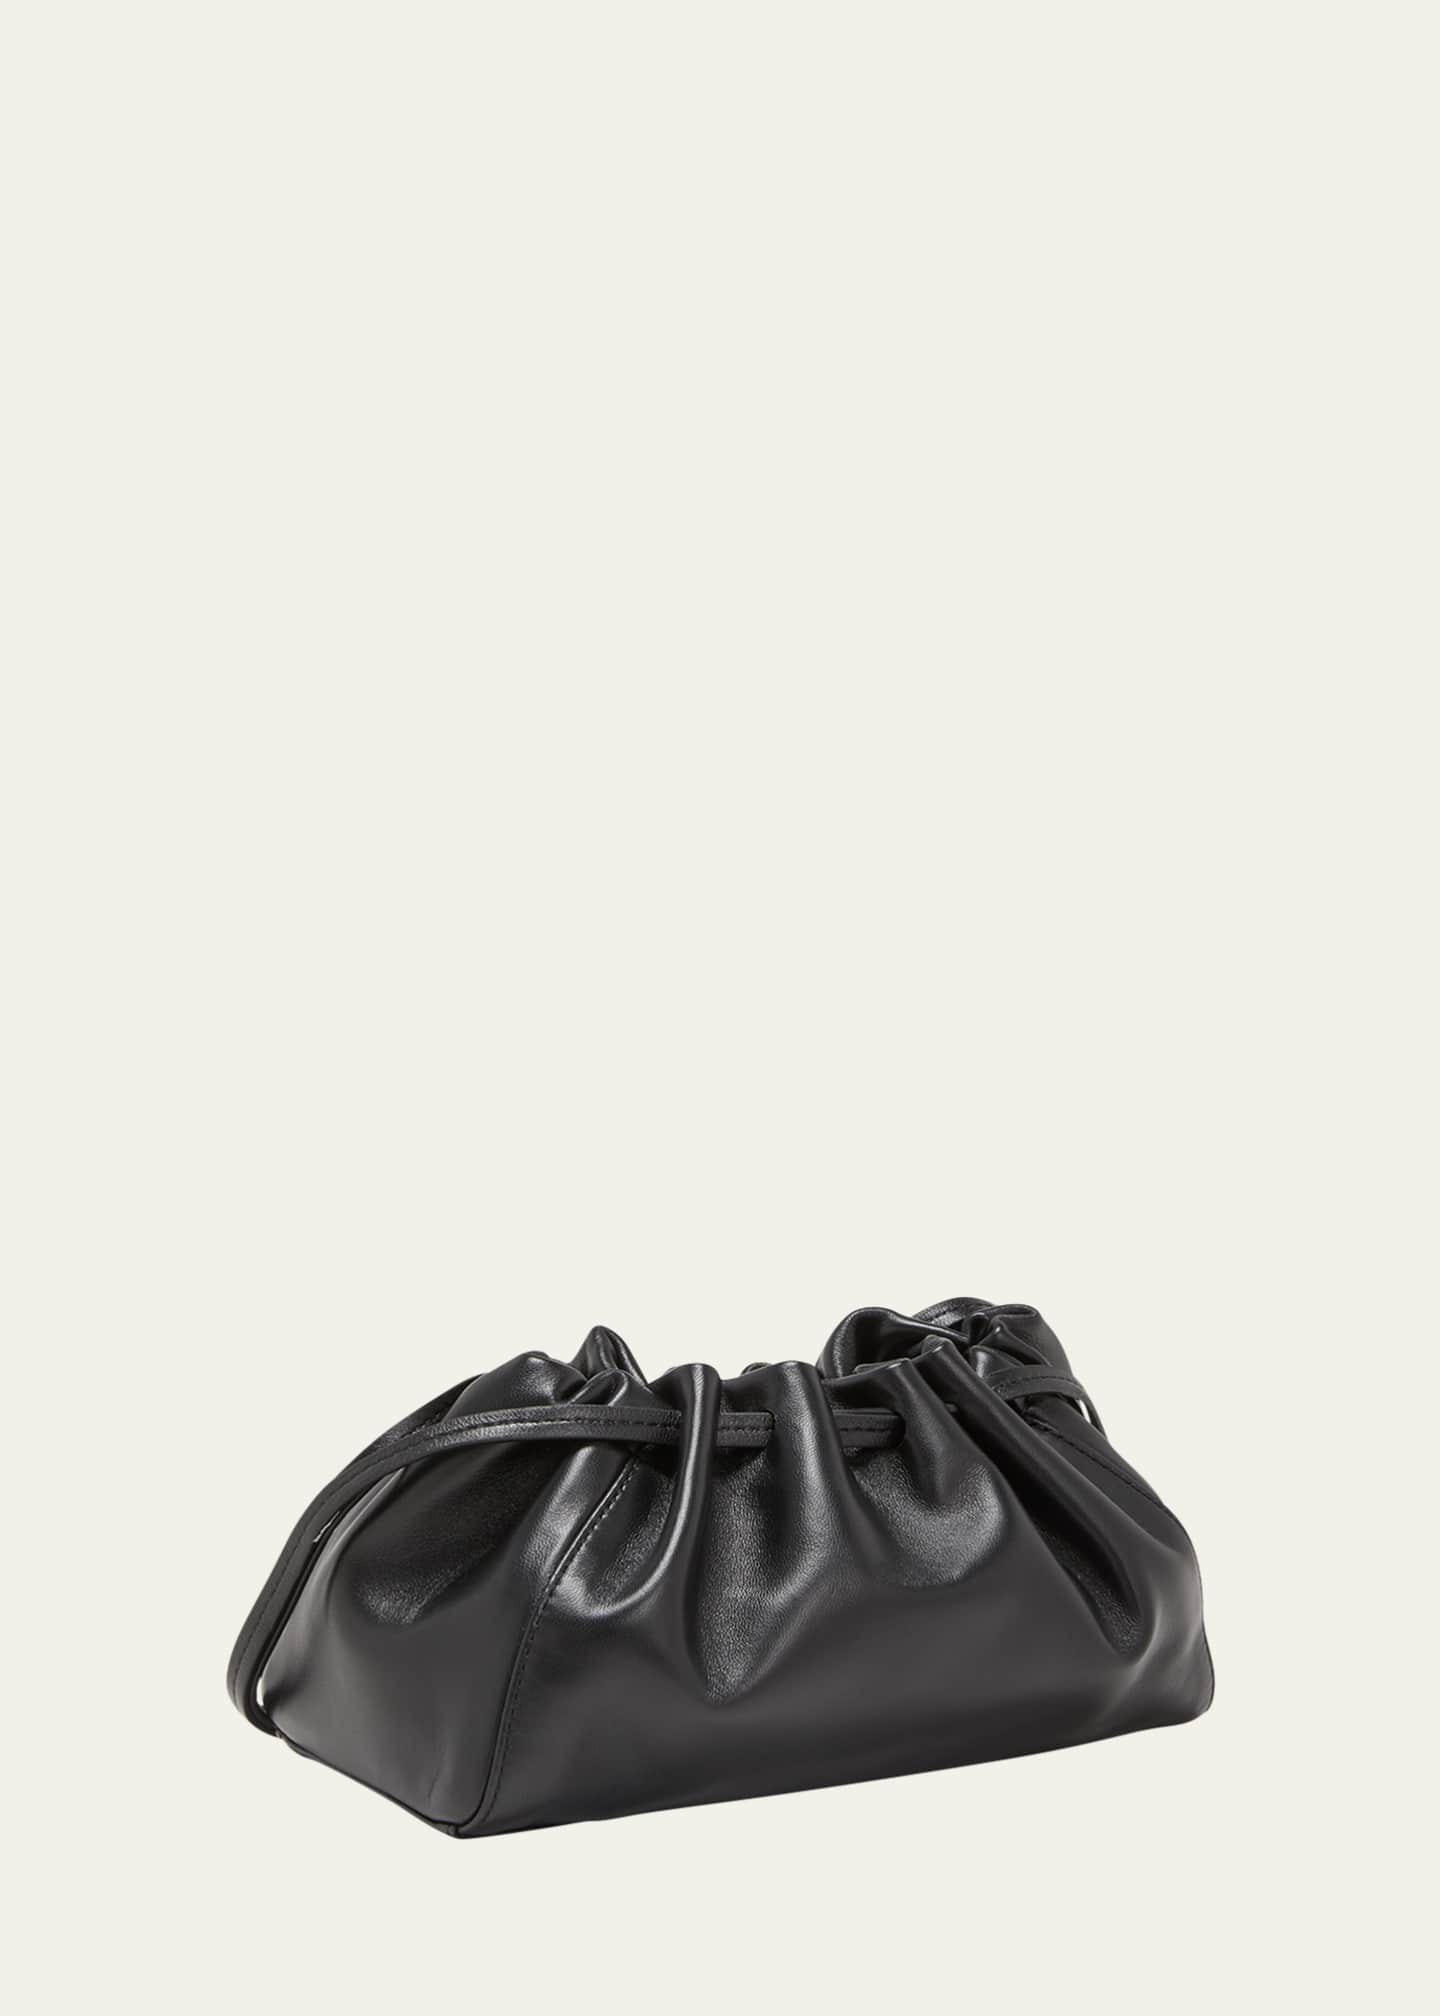 Mansur Gavriel Bloom Mini Leather Crossbody Bag